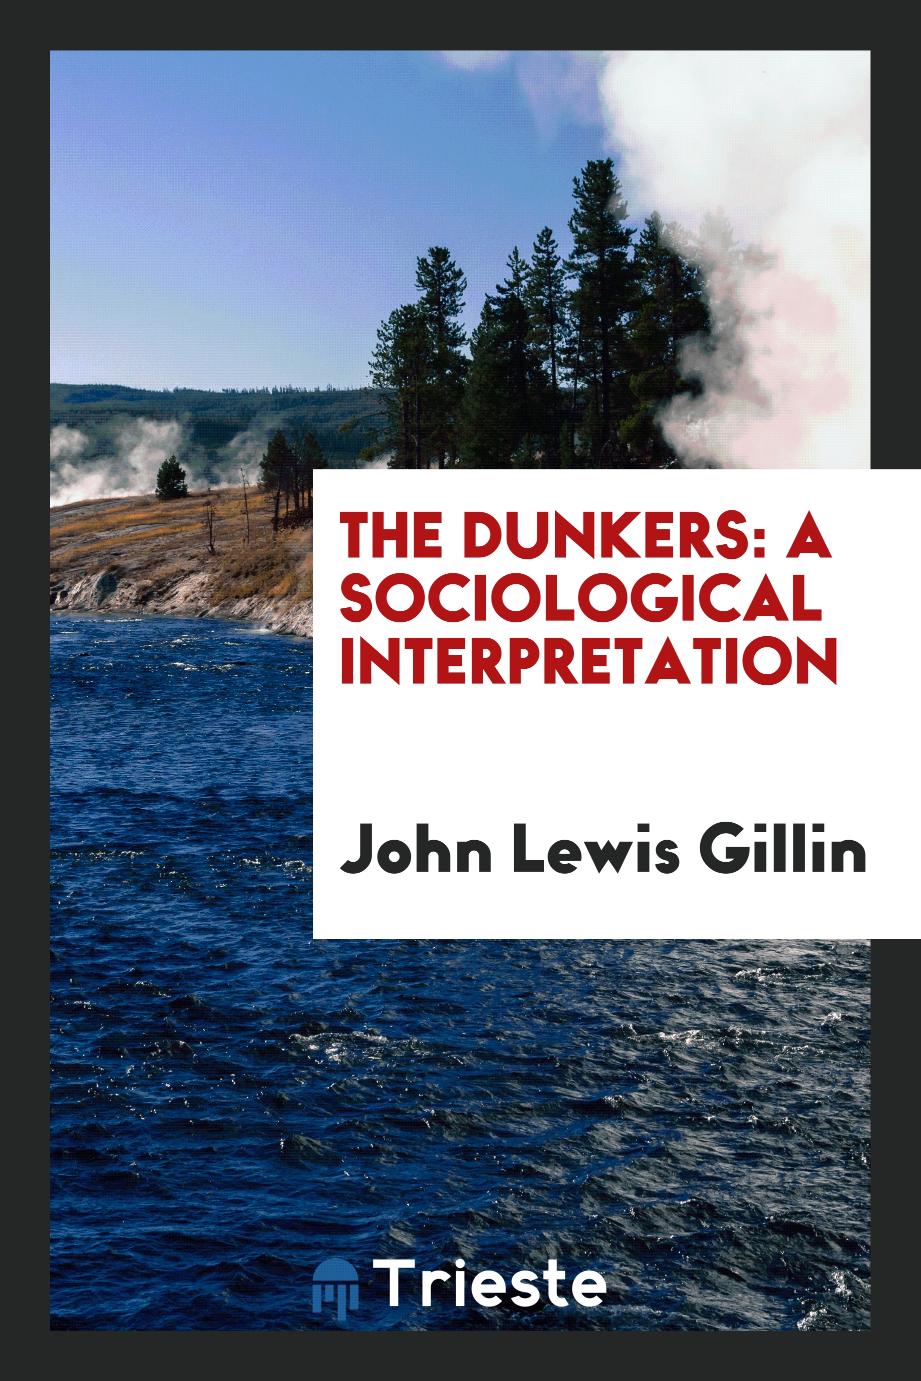 The Dunkers: A Sociological Interpretation